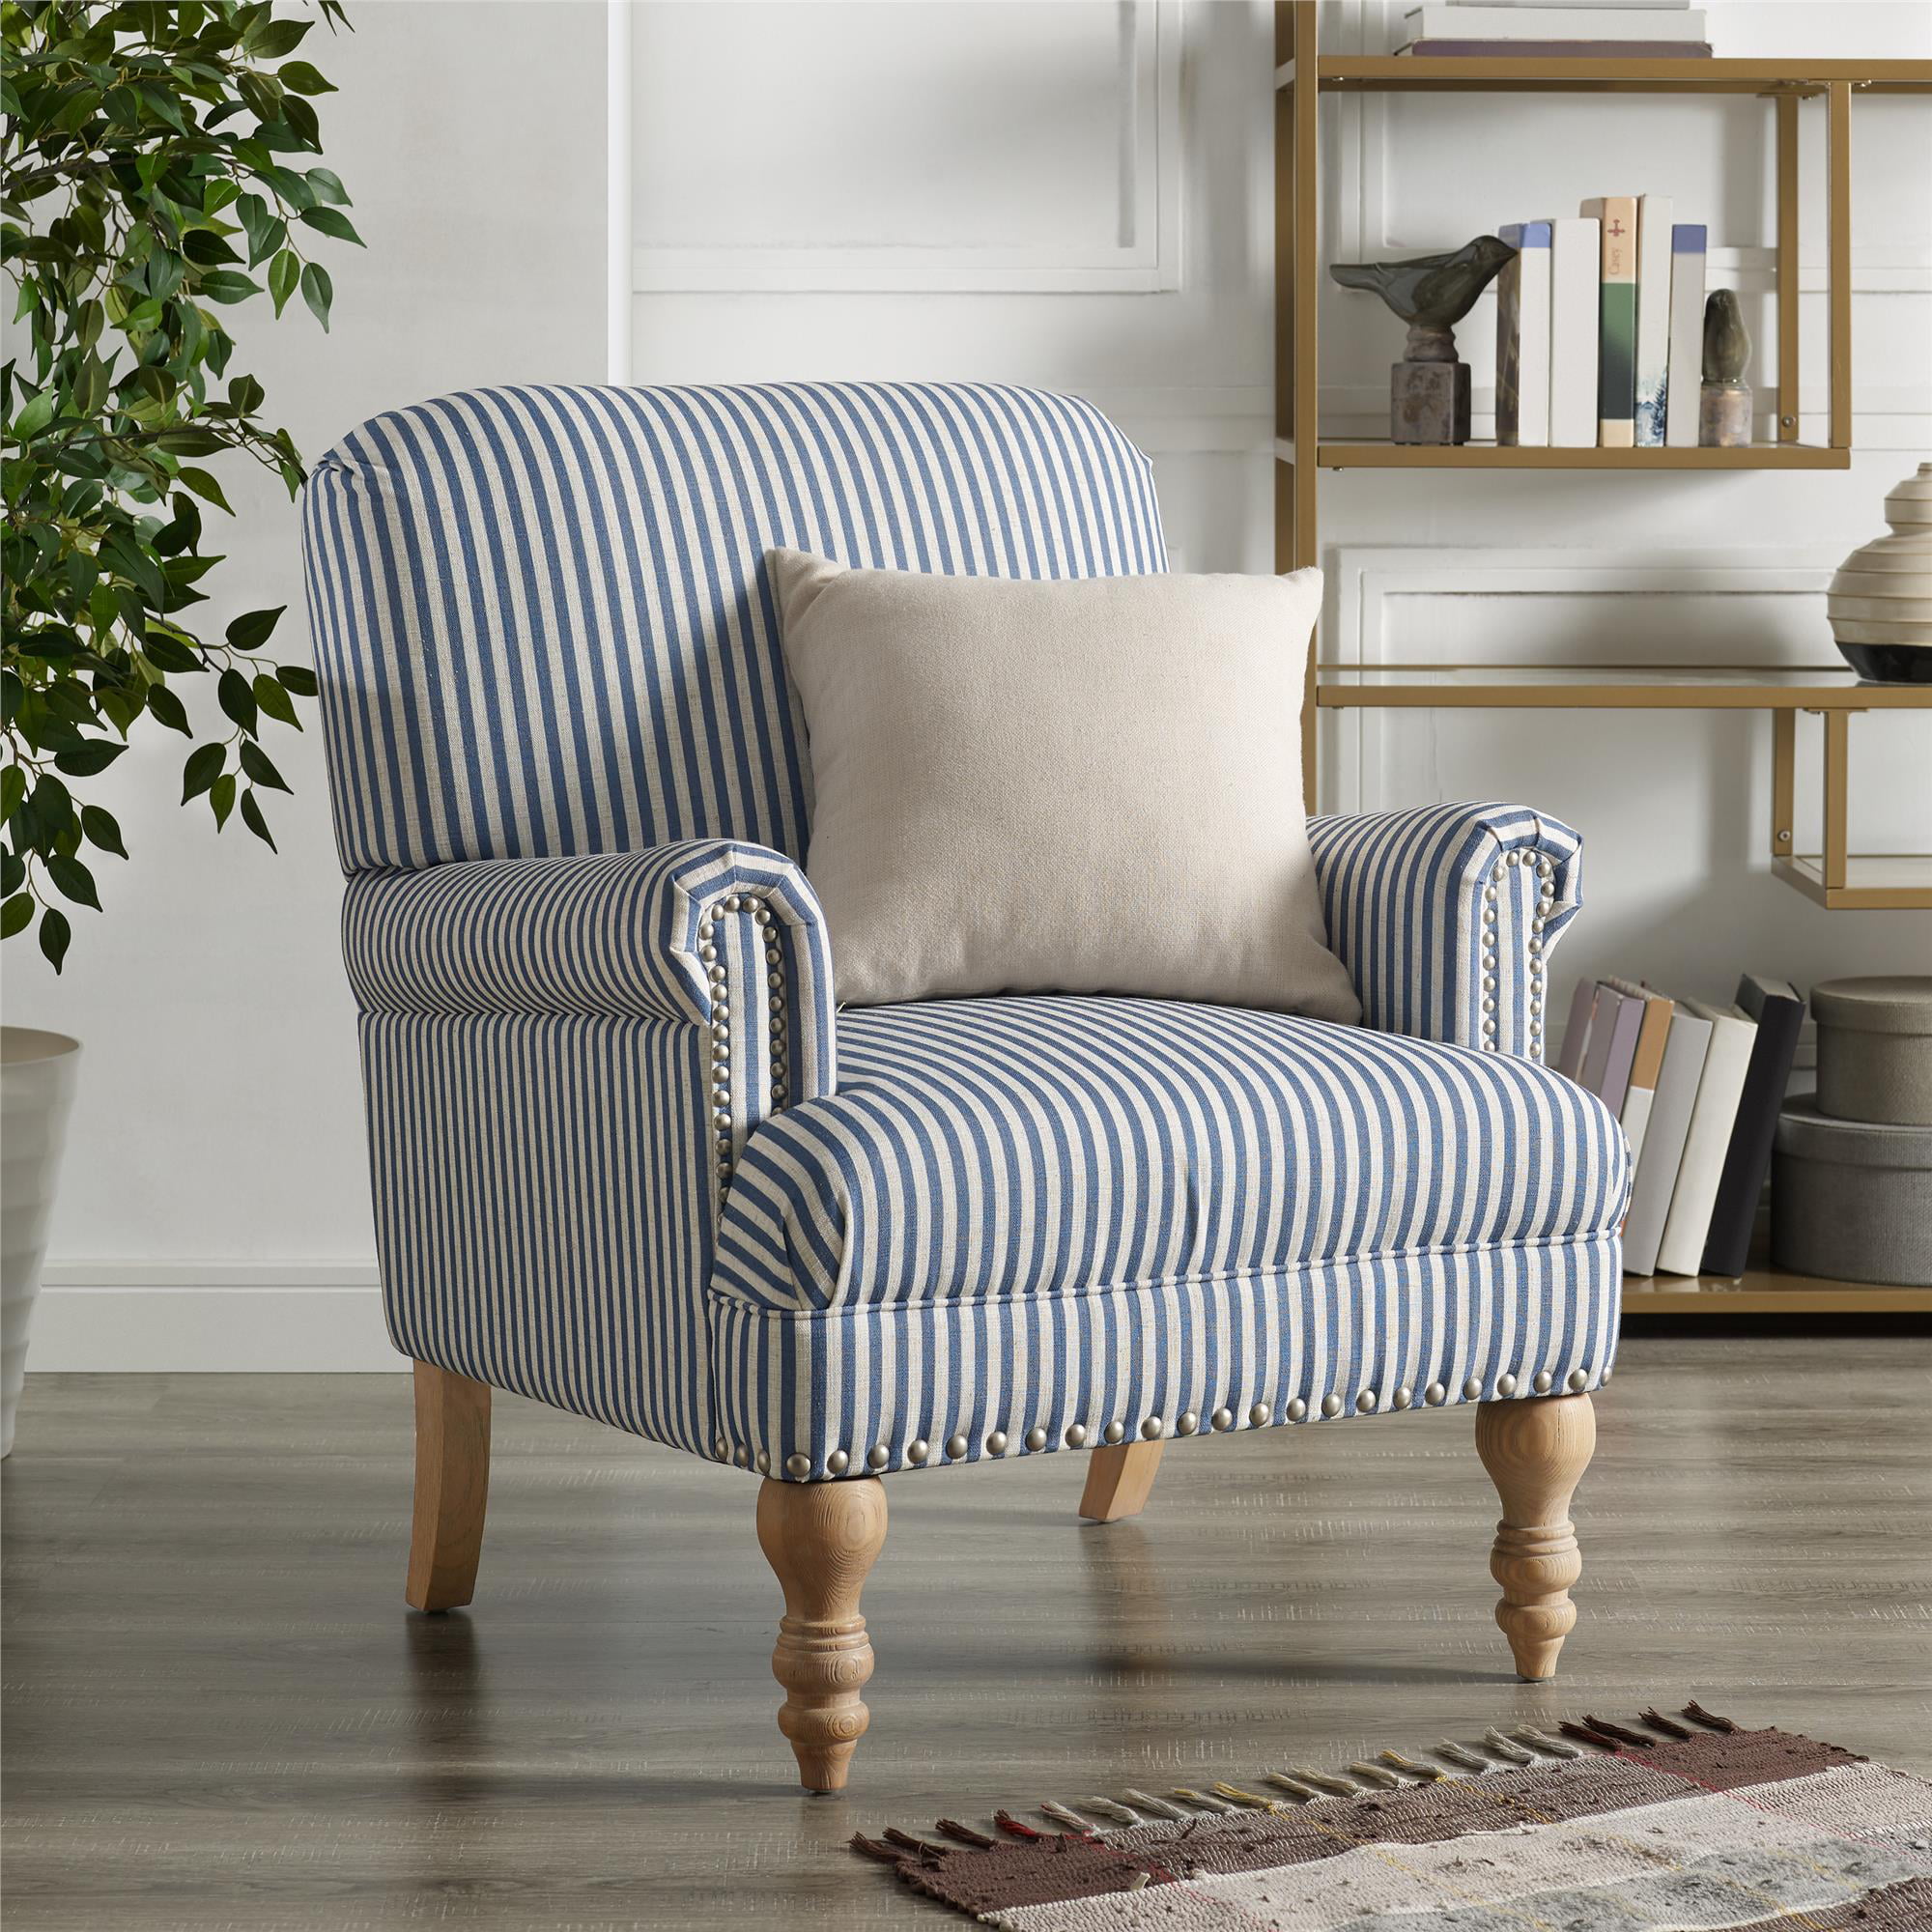 Dorel Living Jaya Accent Chair, Blue Stripe - Walmart.com